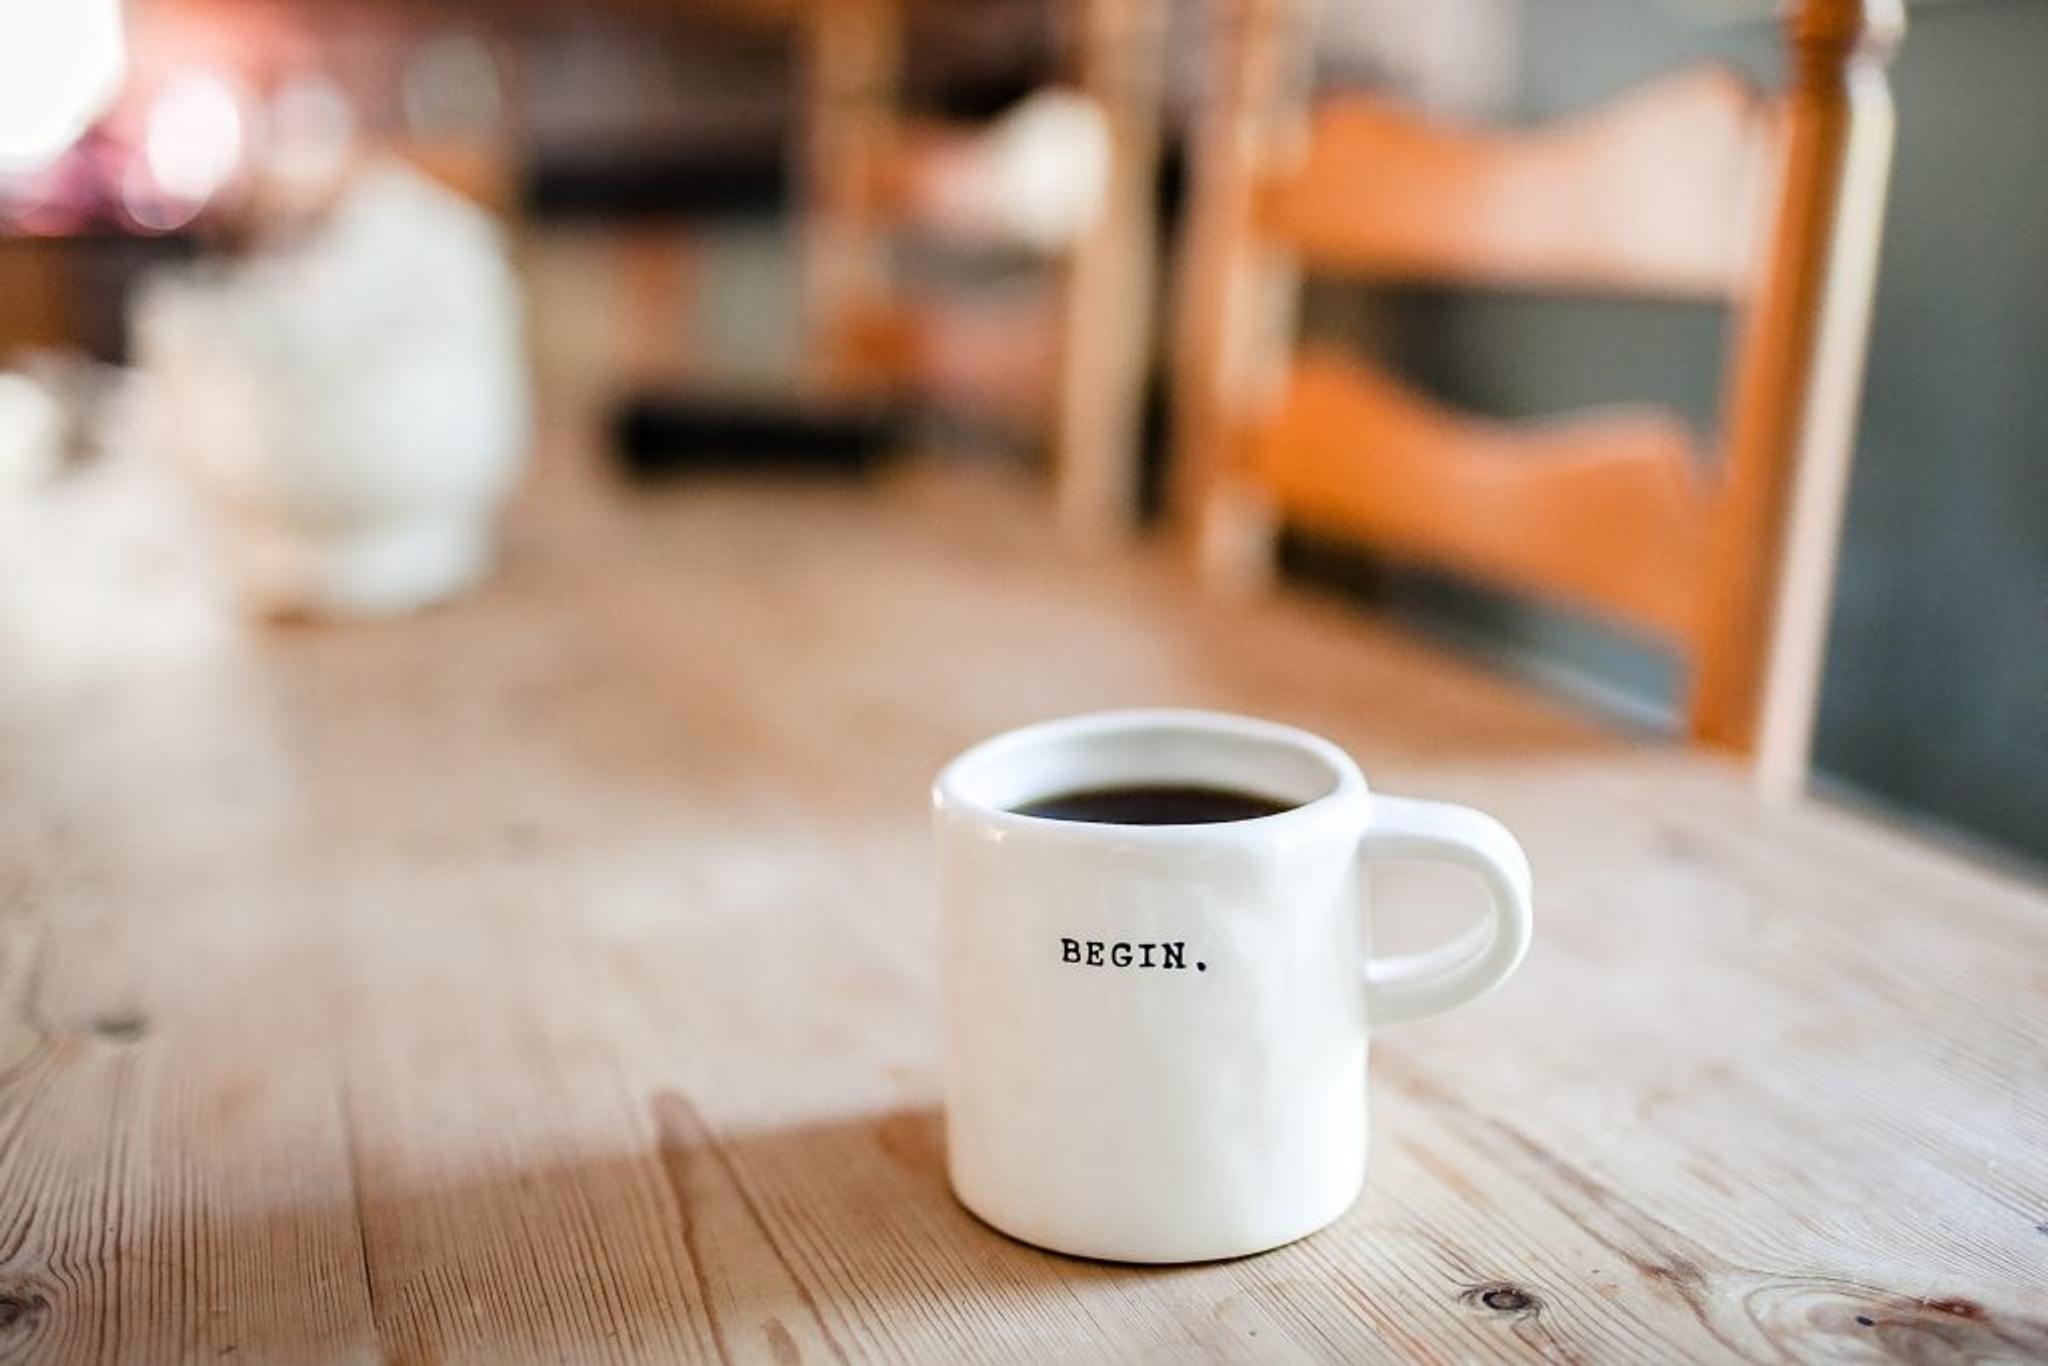 coffee in mug that says "begin"